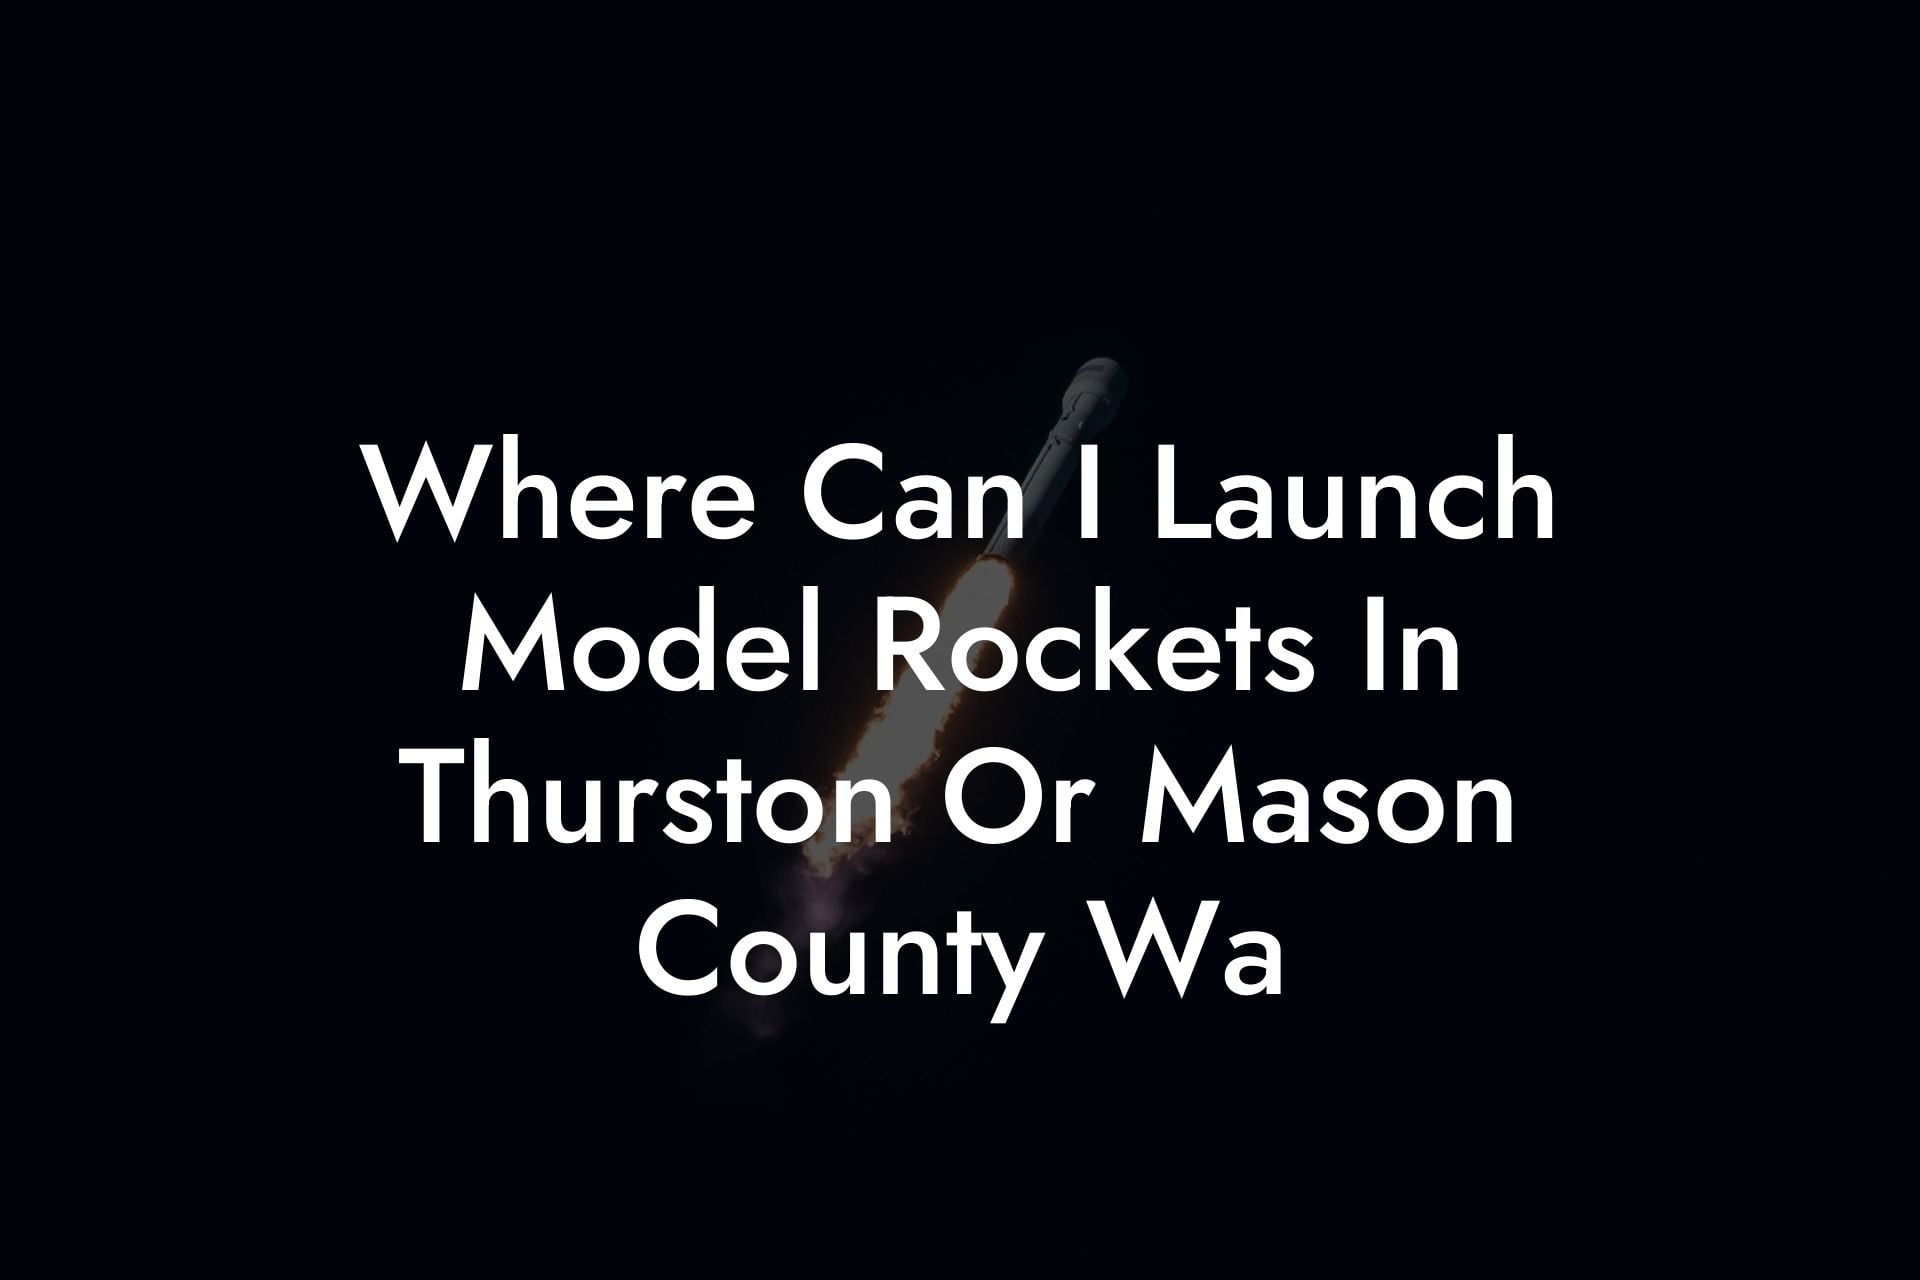 Where Can I Launch Model Rockets In Thurston Or Mason County Wa